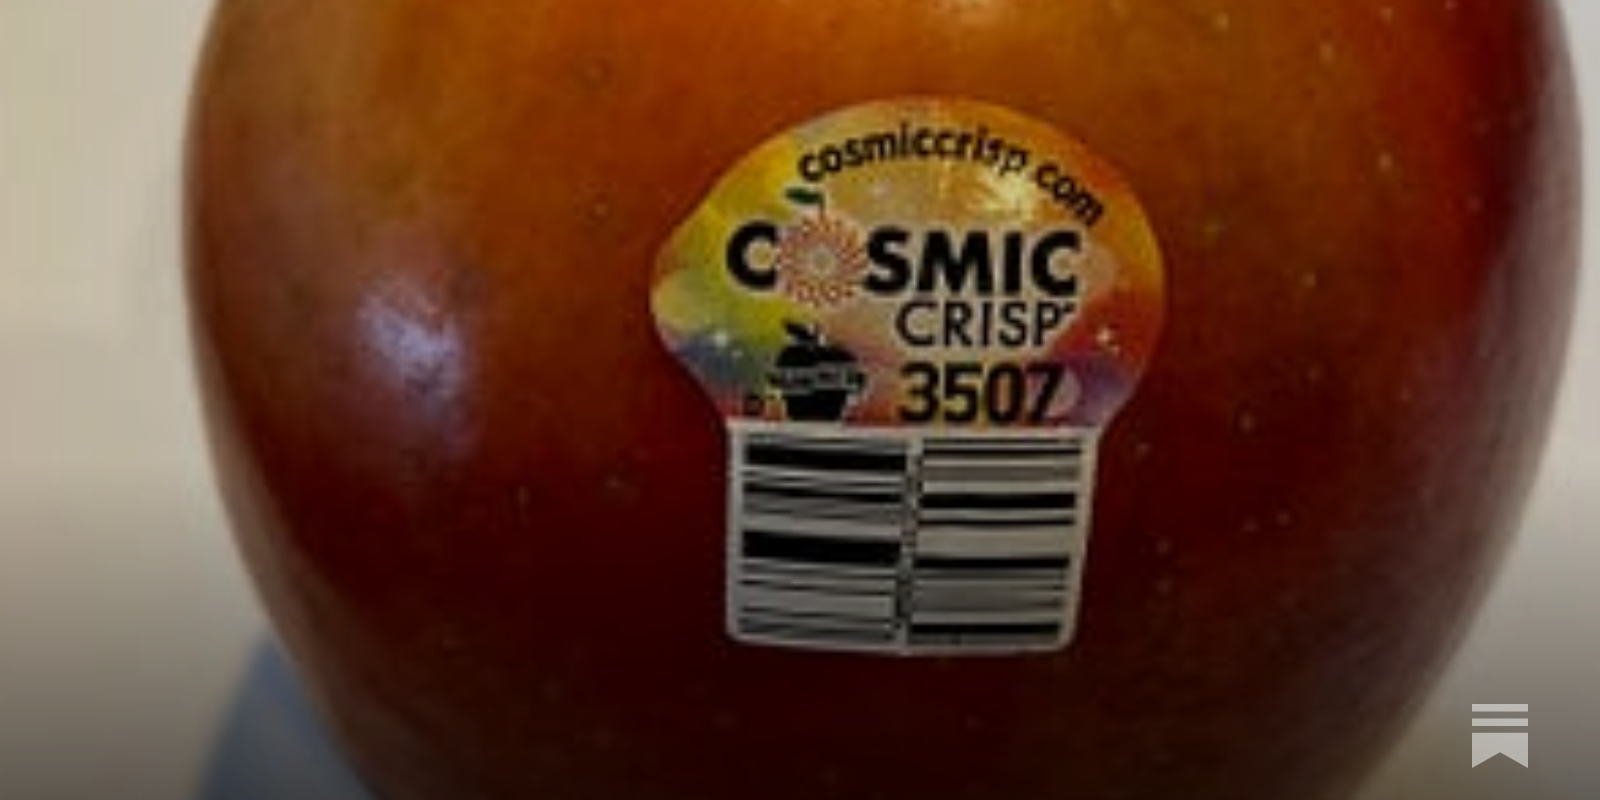 Cosmic Crisp vs. SugarBee smackdown - Adam's Apples